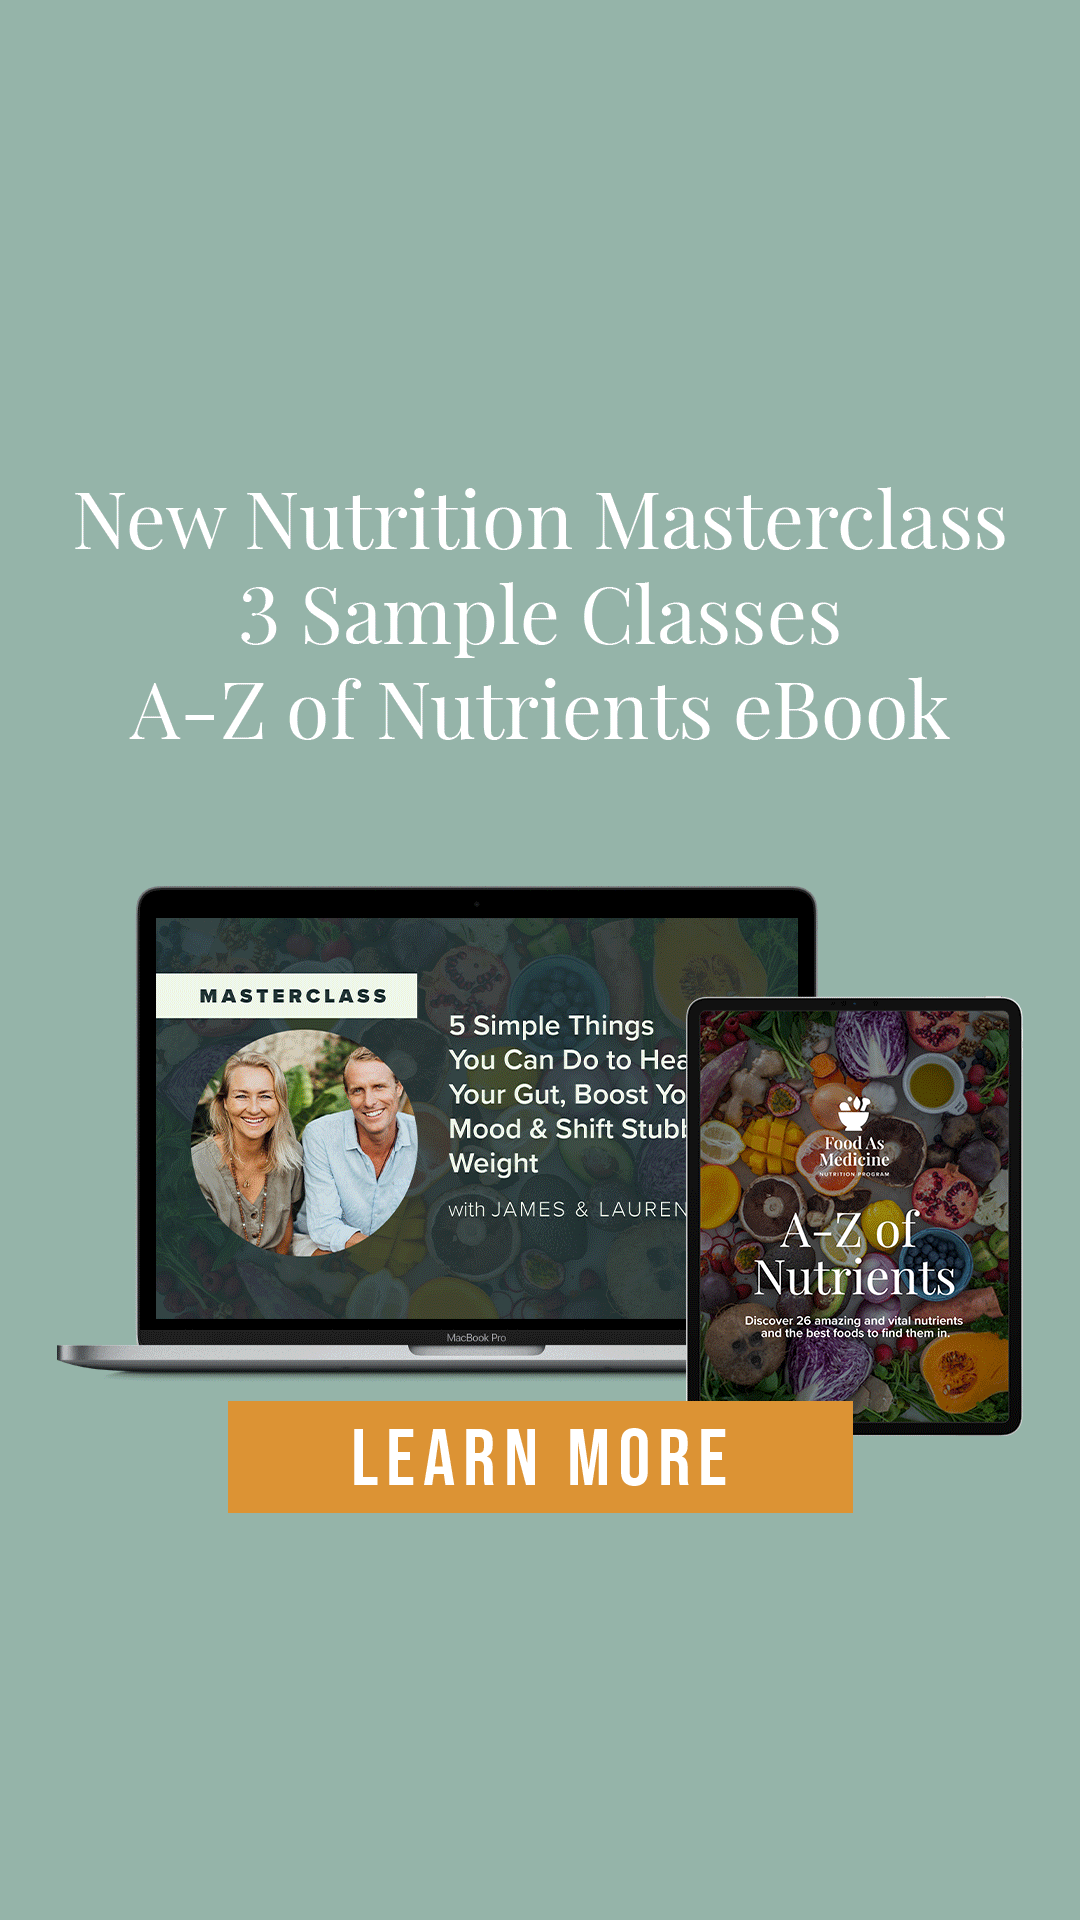 New Nutrition Masterclass & 3 Sample Classes & Ebook